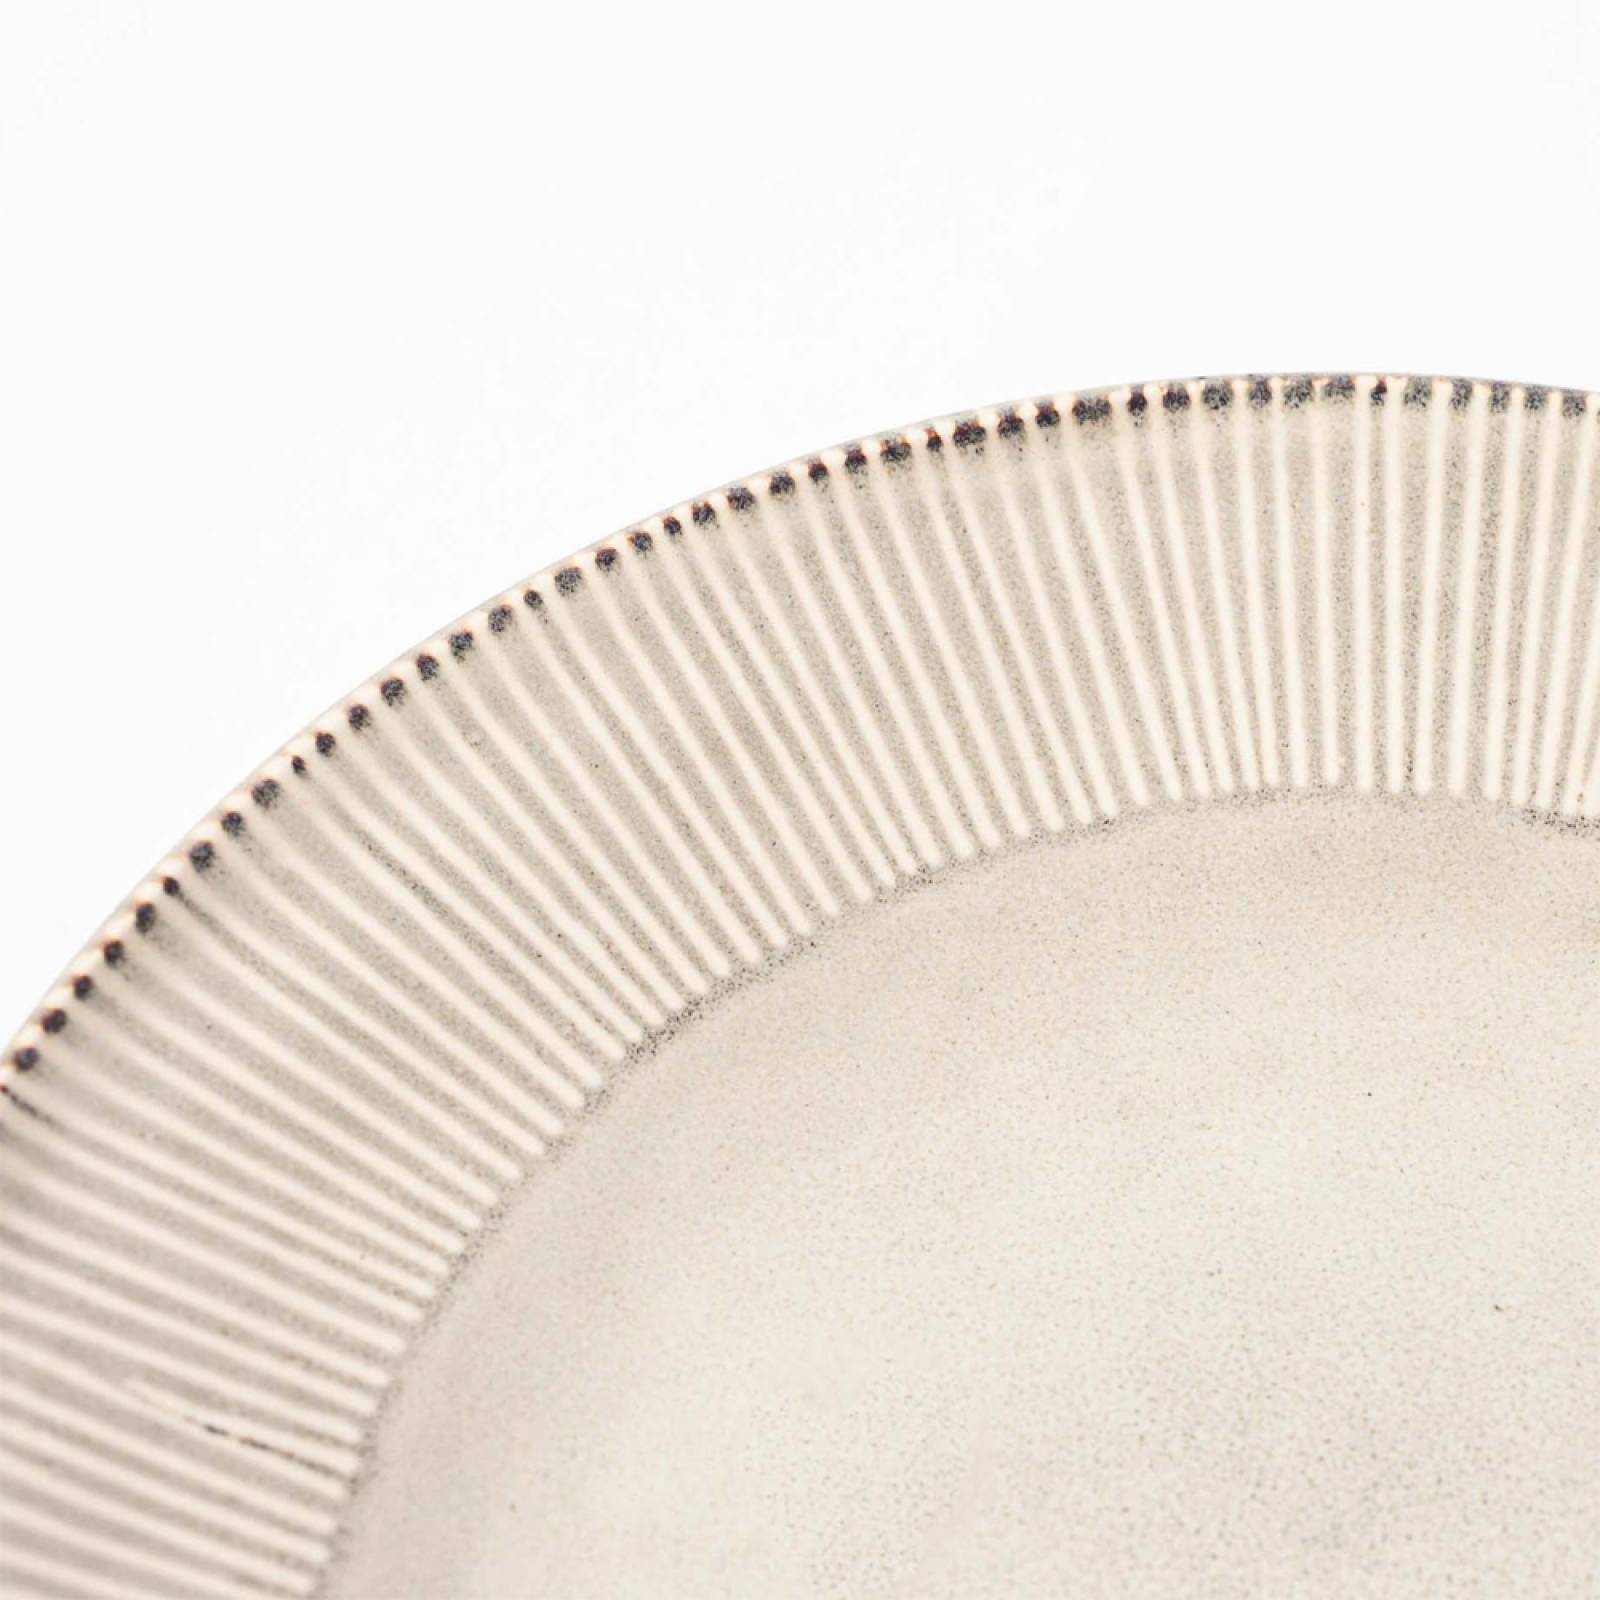 Malia Stoneware Side Plate In Cream thumbnails